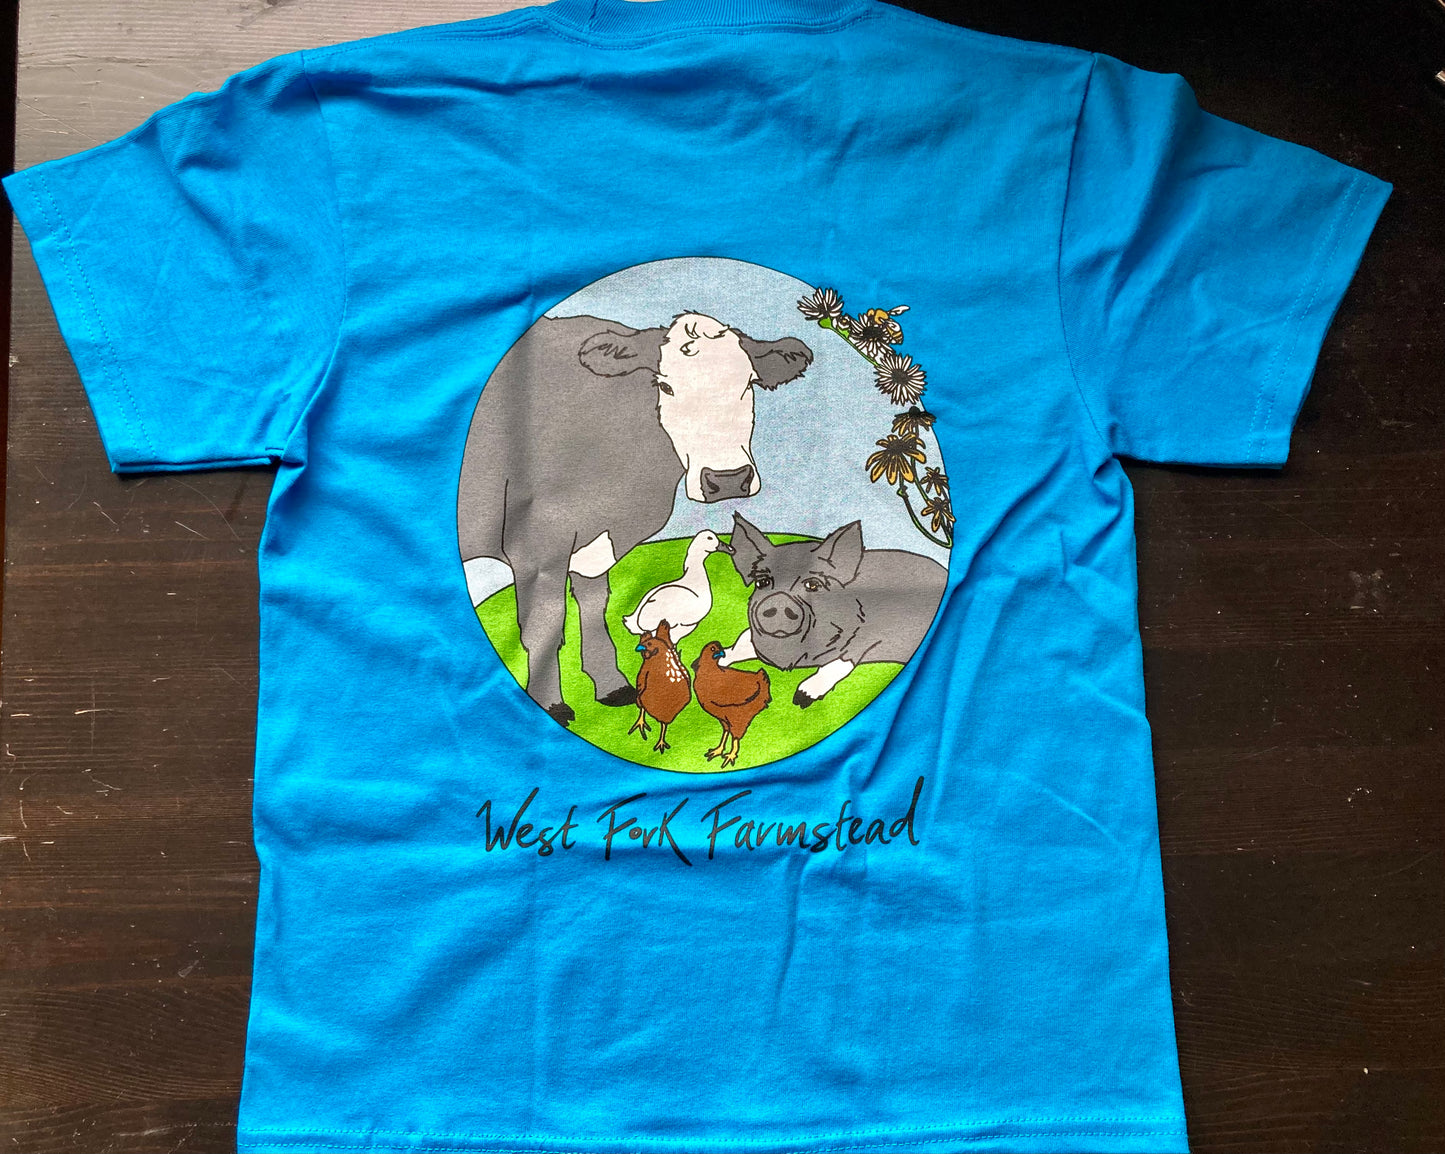 West Fork Farmstead T-shirts